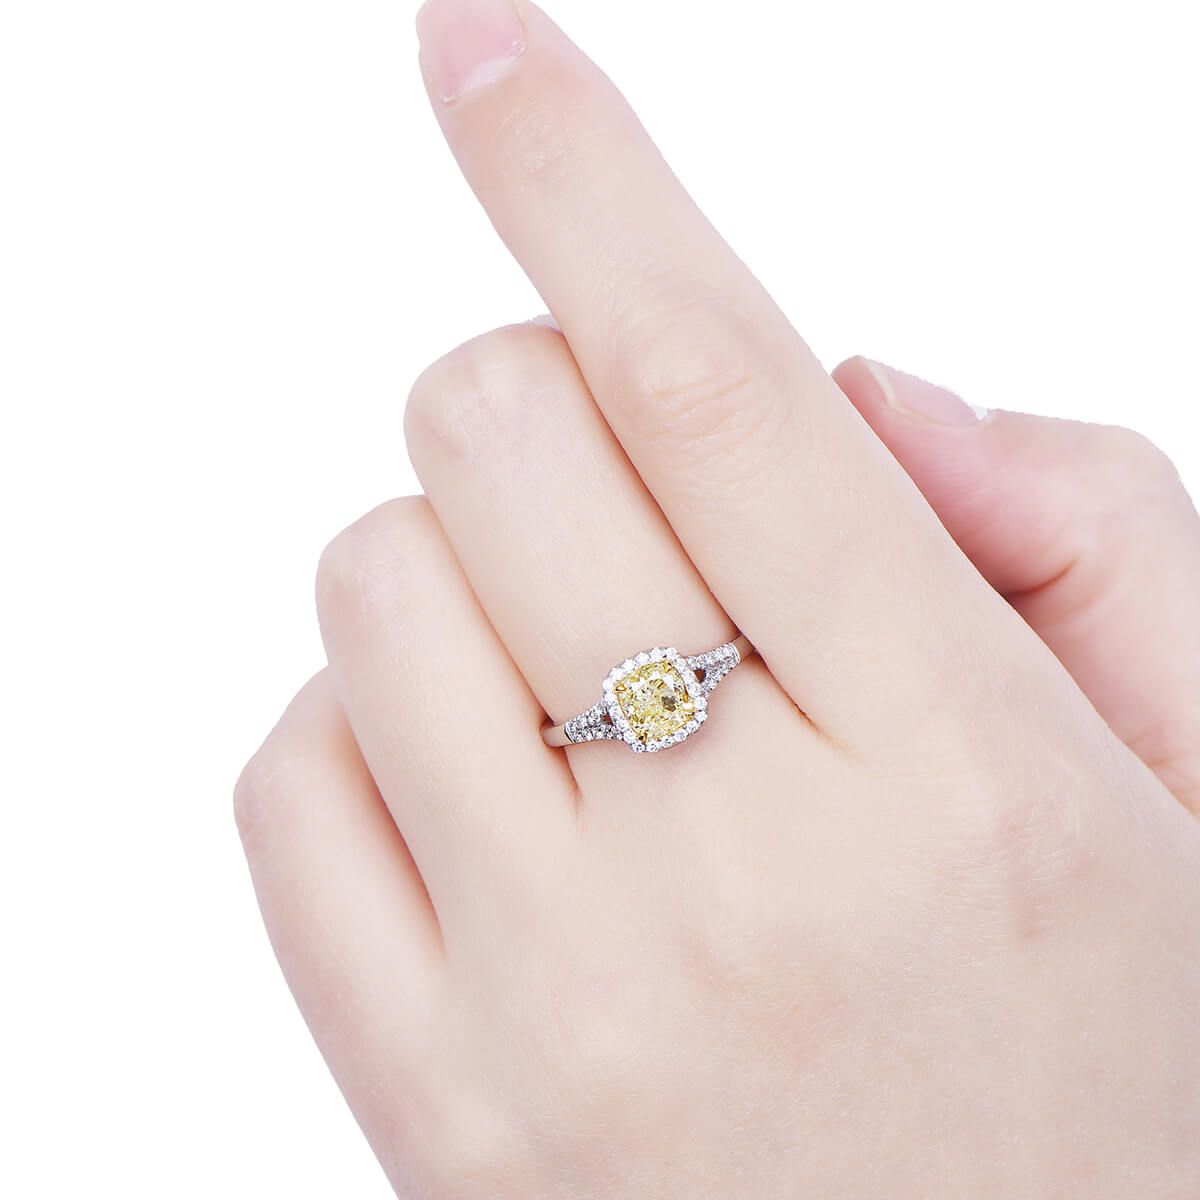 Fancy Light Yellow Diamond Ring, 1.00 Ct. (1.17 Ct. TW), Cushion shape, EG_Lab Certified, J520144